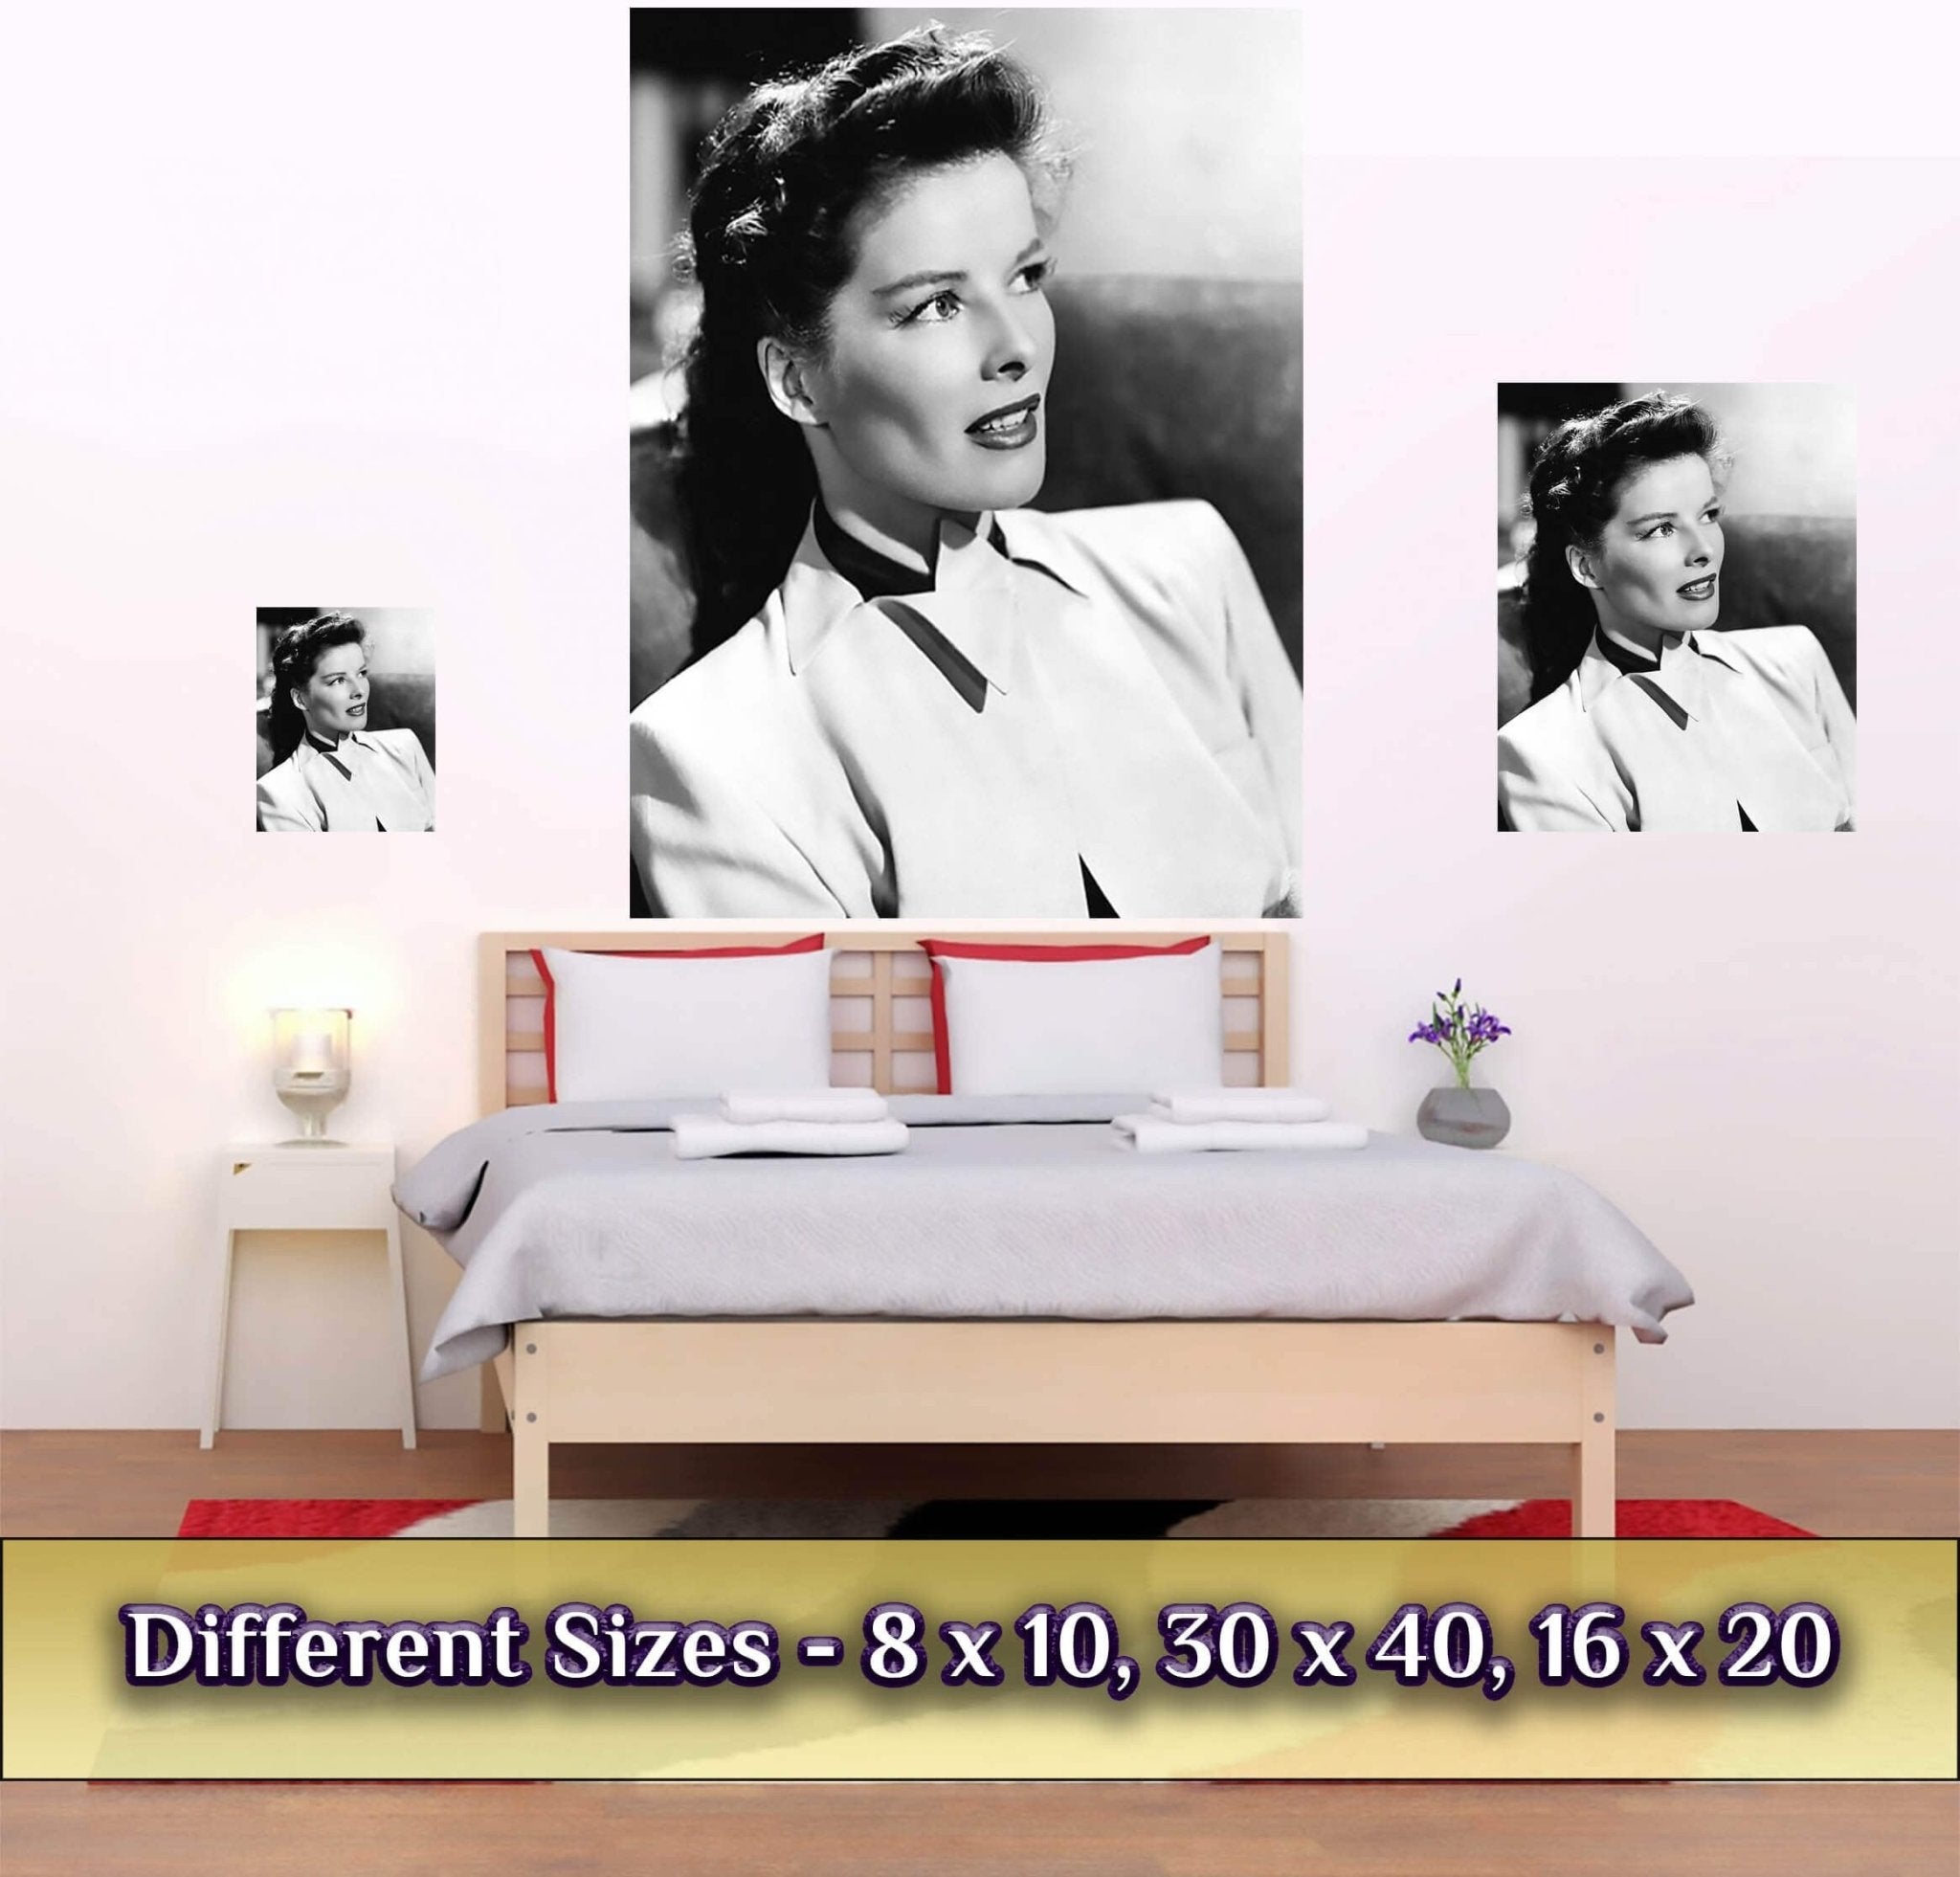 Katherine Hepburn Poster, Independent Woman Symbol, Rare Photo, Katherine Hepburn Print, Silver Screen Star - WallArtPrints4U